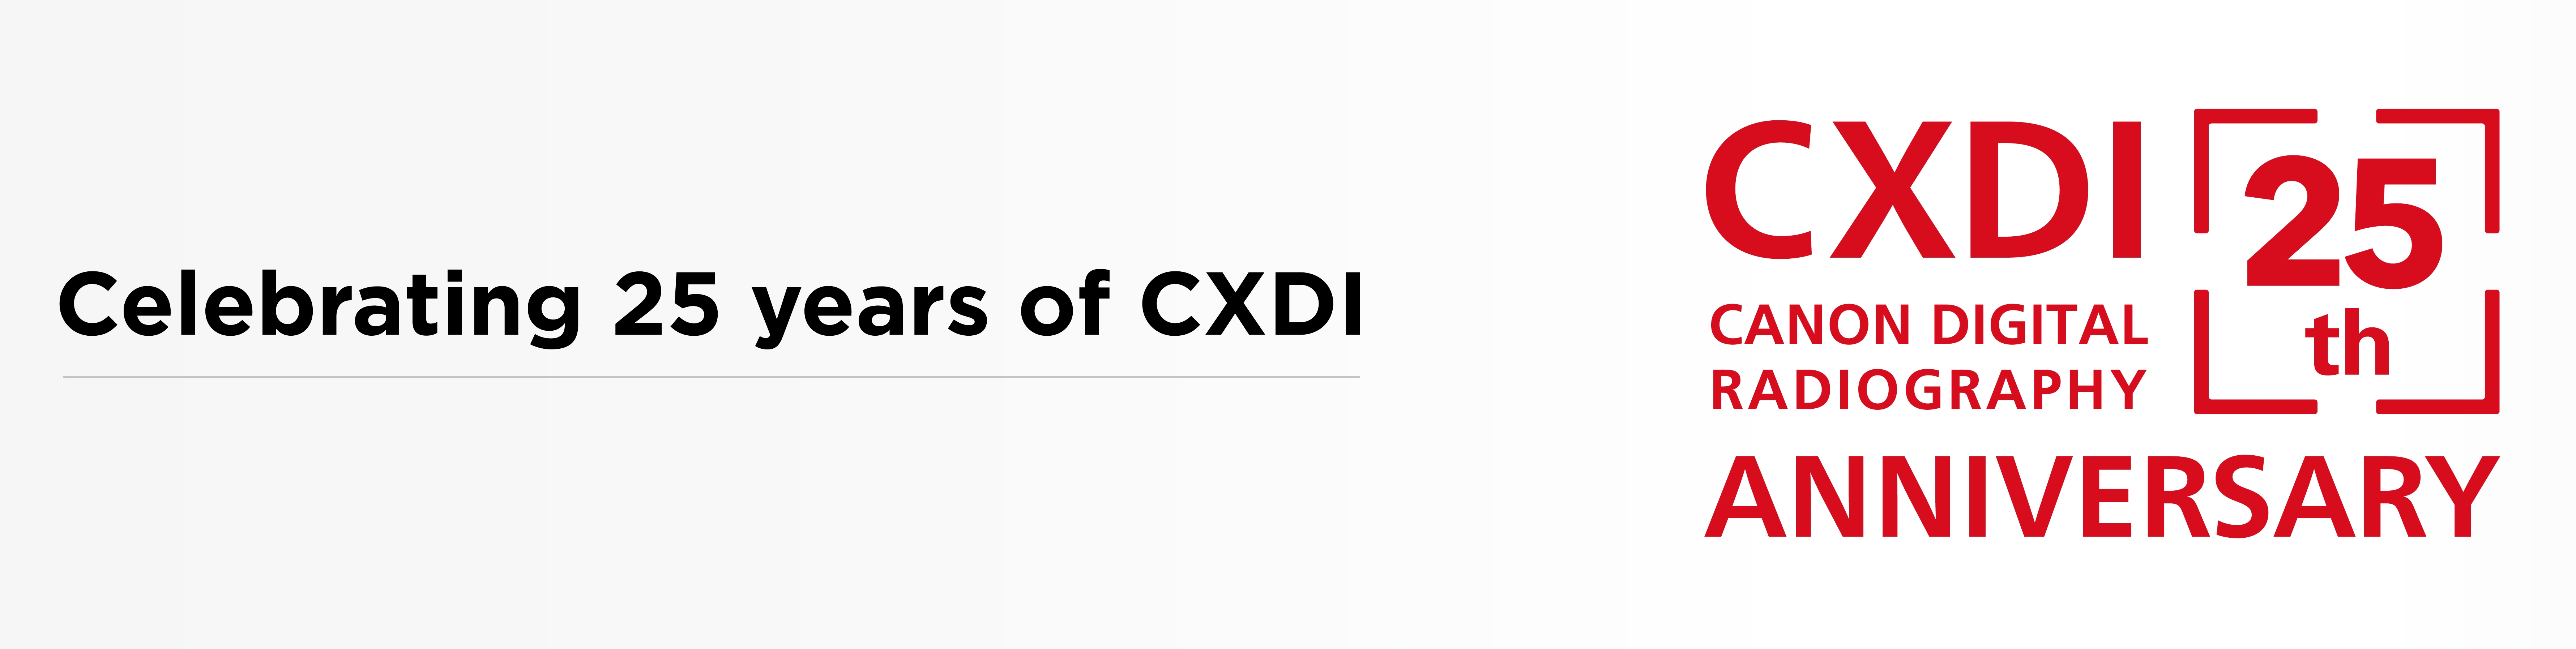 Celebrating 25 years of CXDI